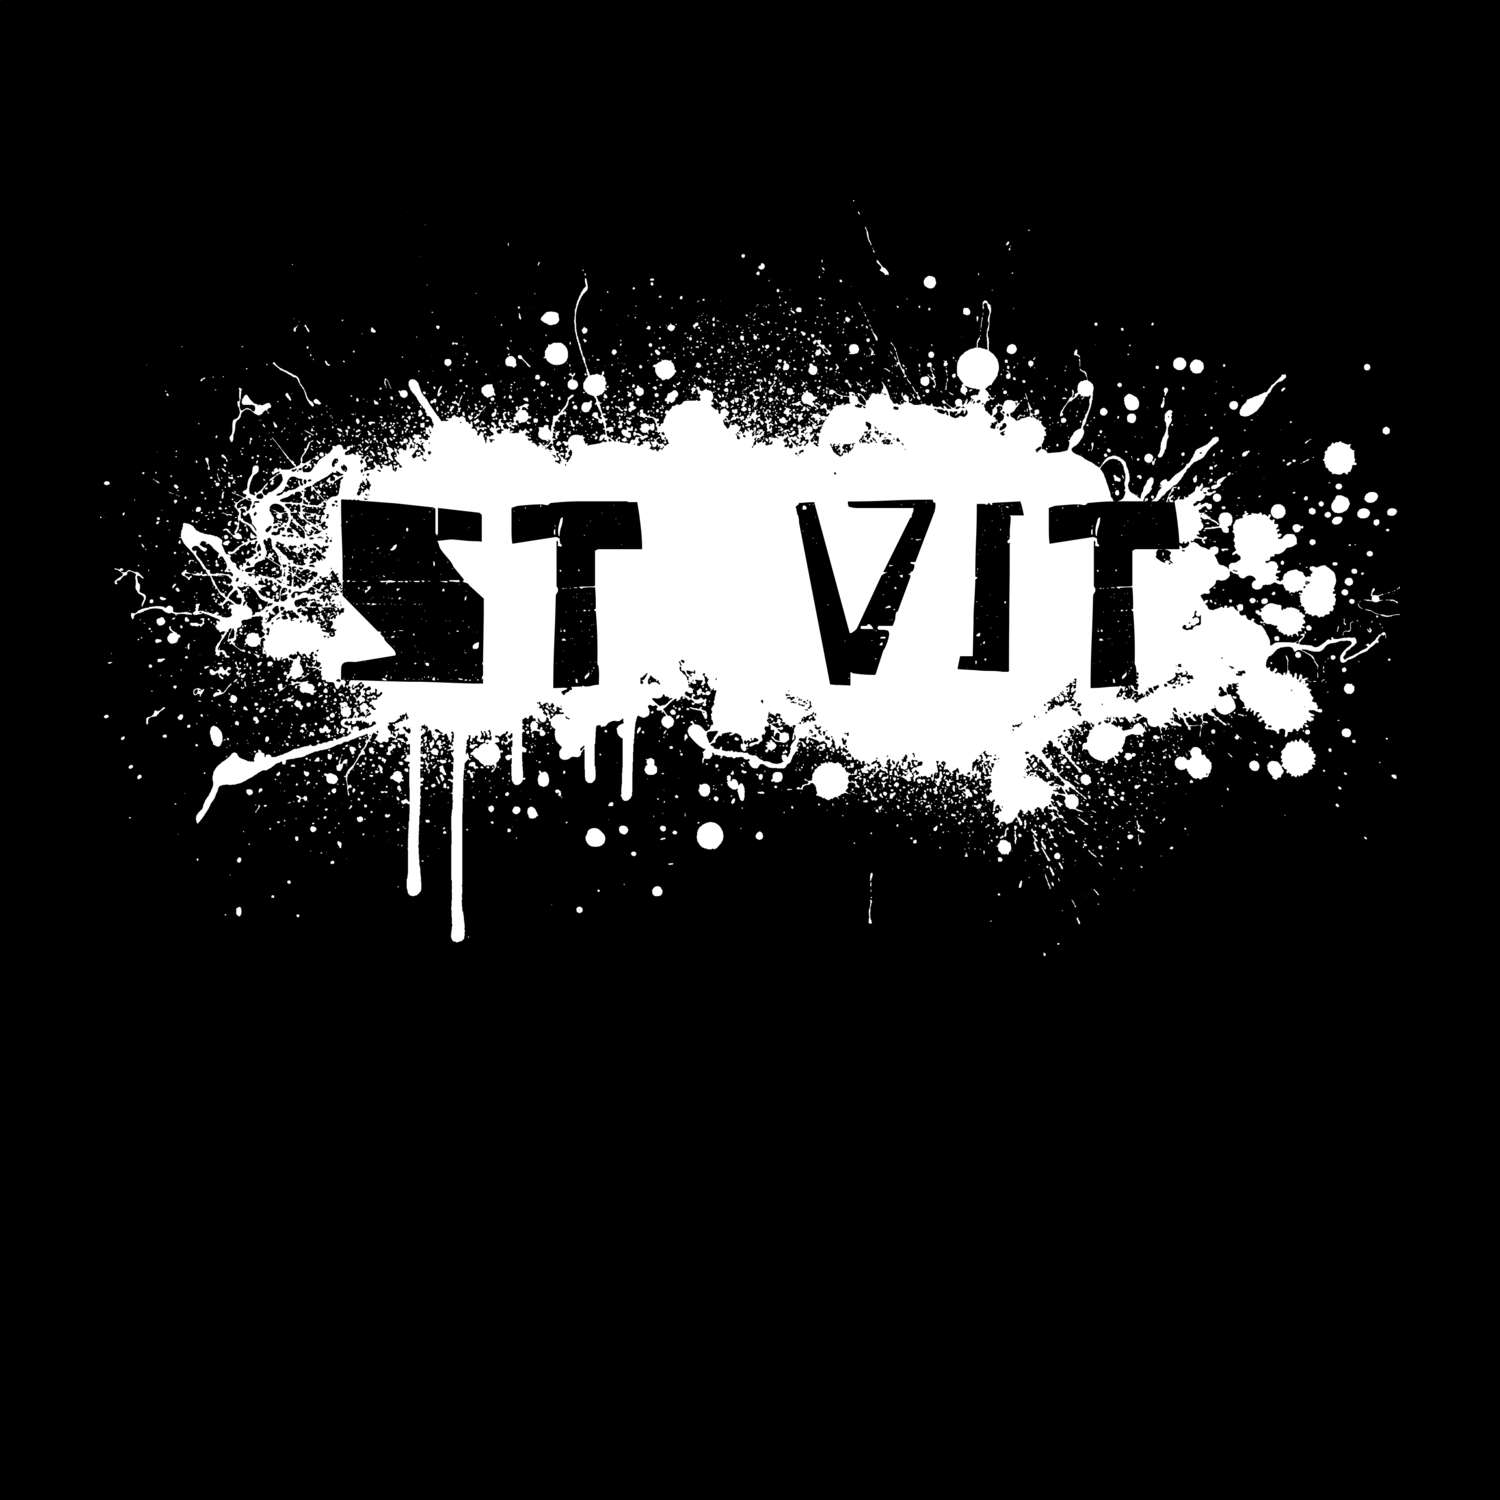 St Vit T-Shirt »Paint Splash Punk«